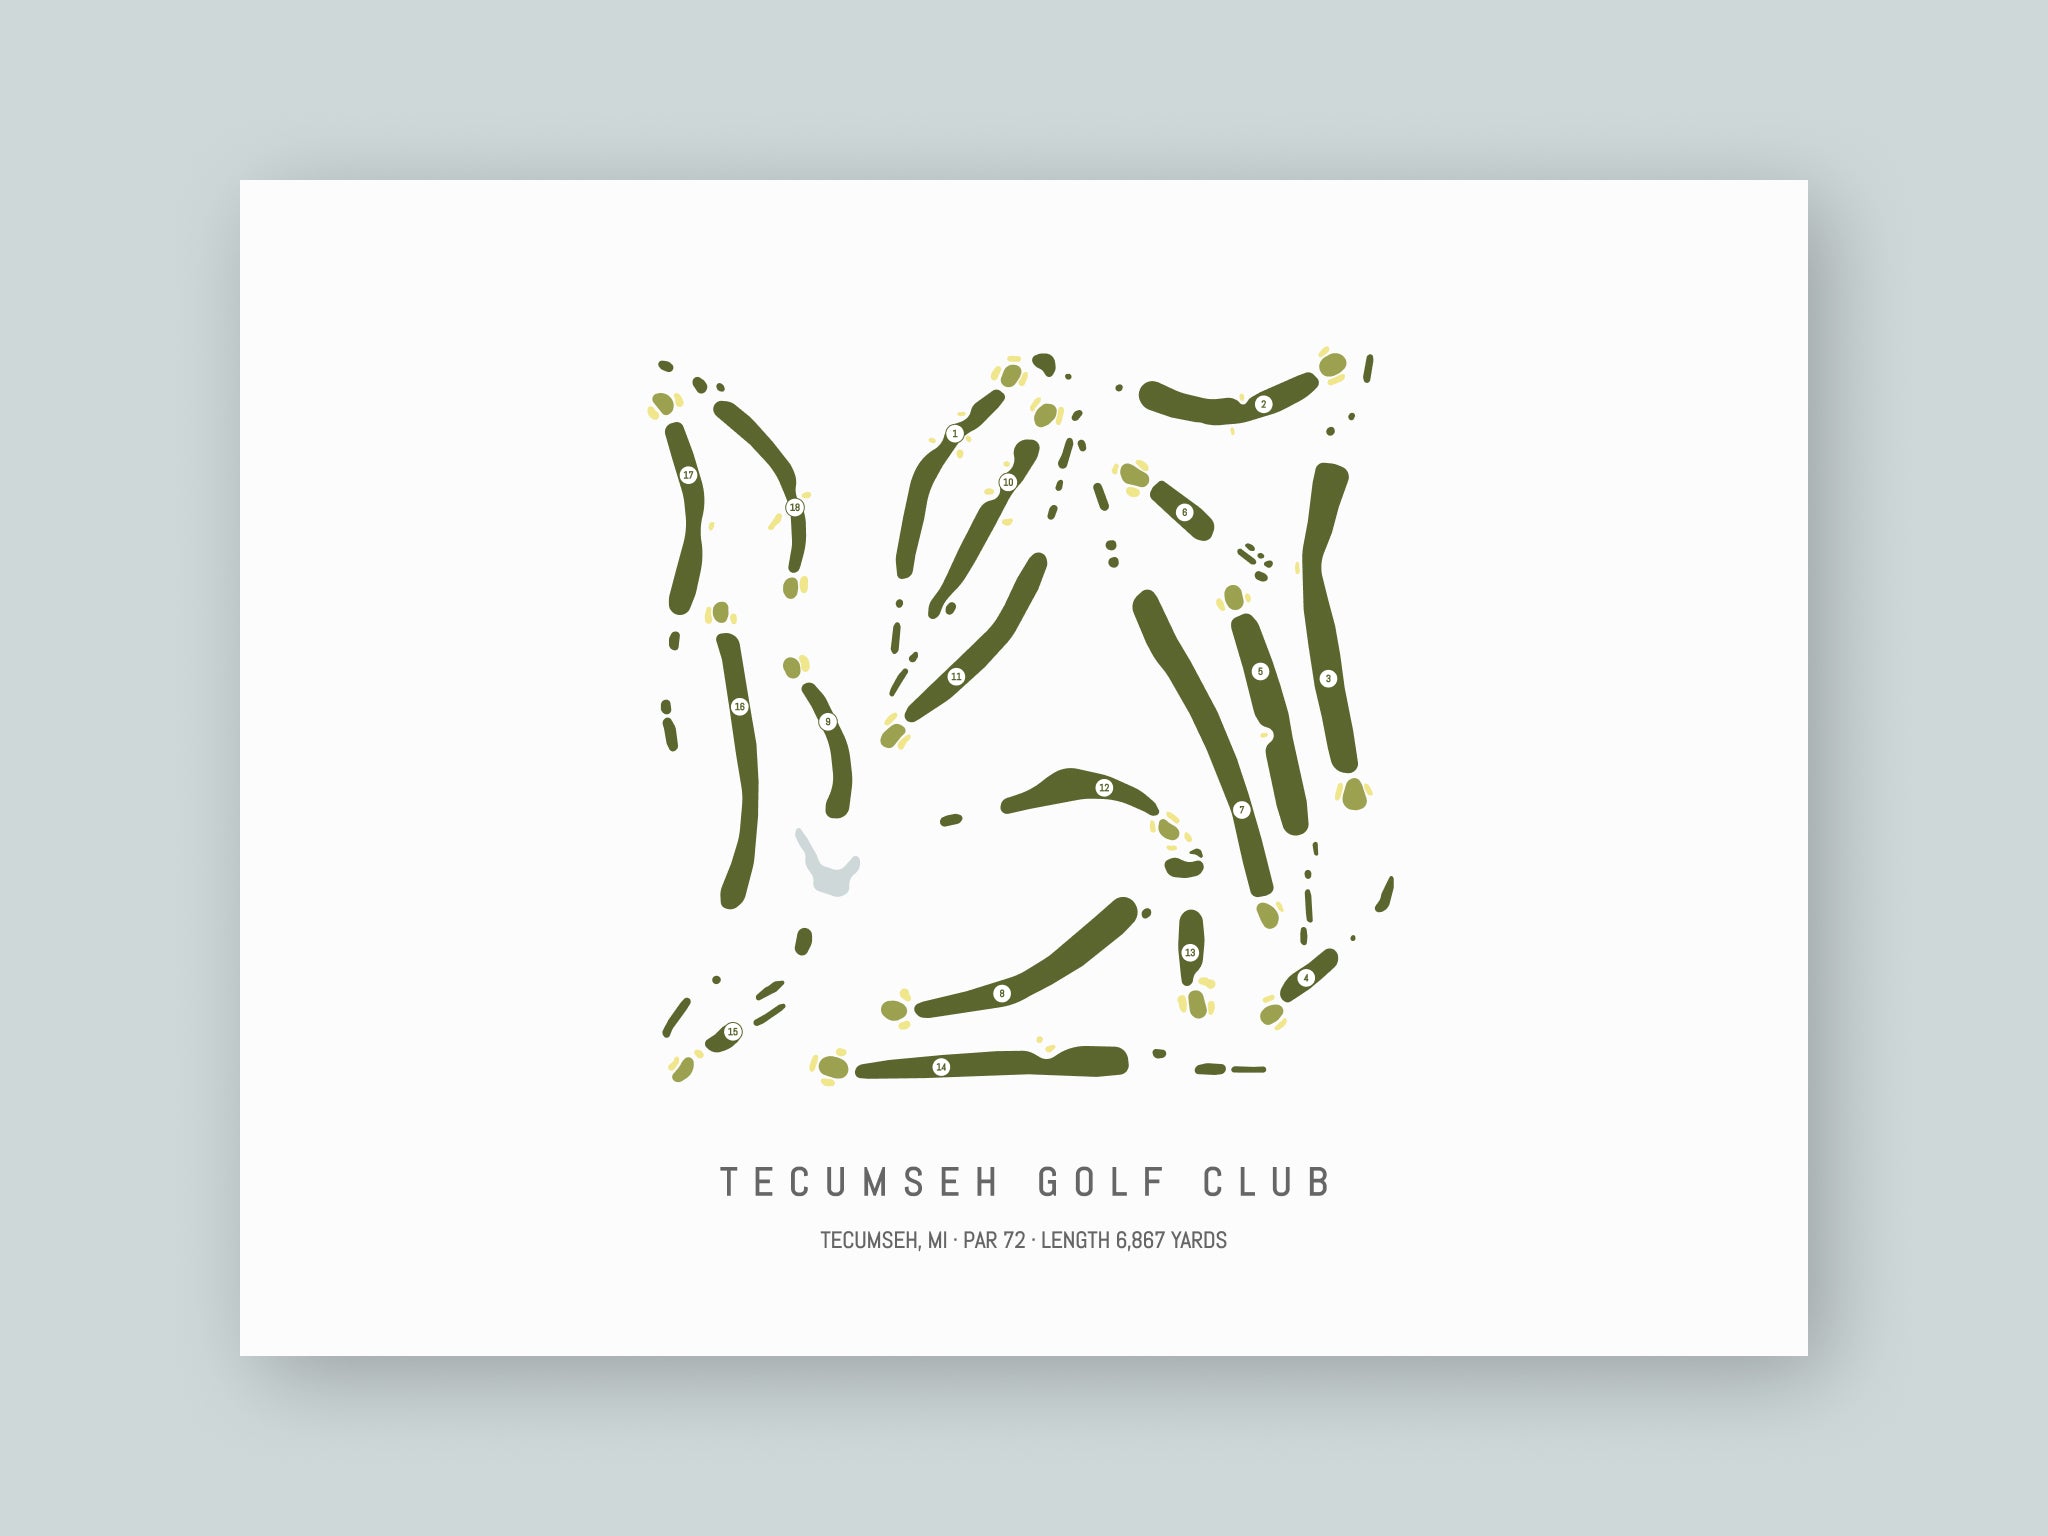 Tecumseh-Golf-Club-MI--Unframed-24x18-With-Hole-Numbers